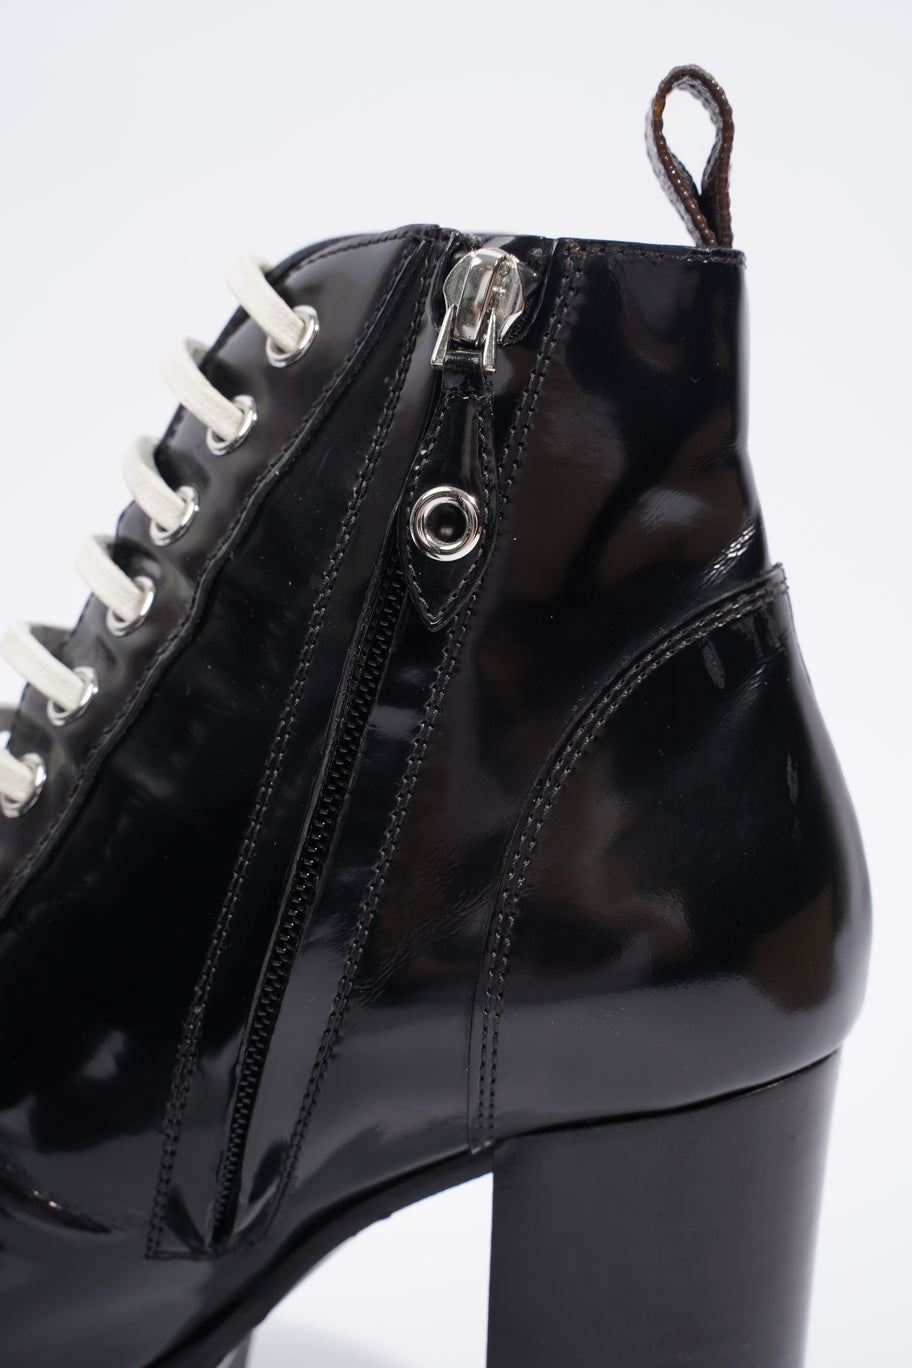 Louis Vuitton Star Trail Ankle Boot Patent Black EU 36 / UK 3 Image 11